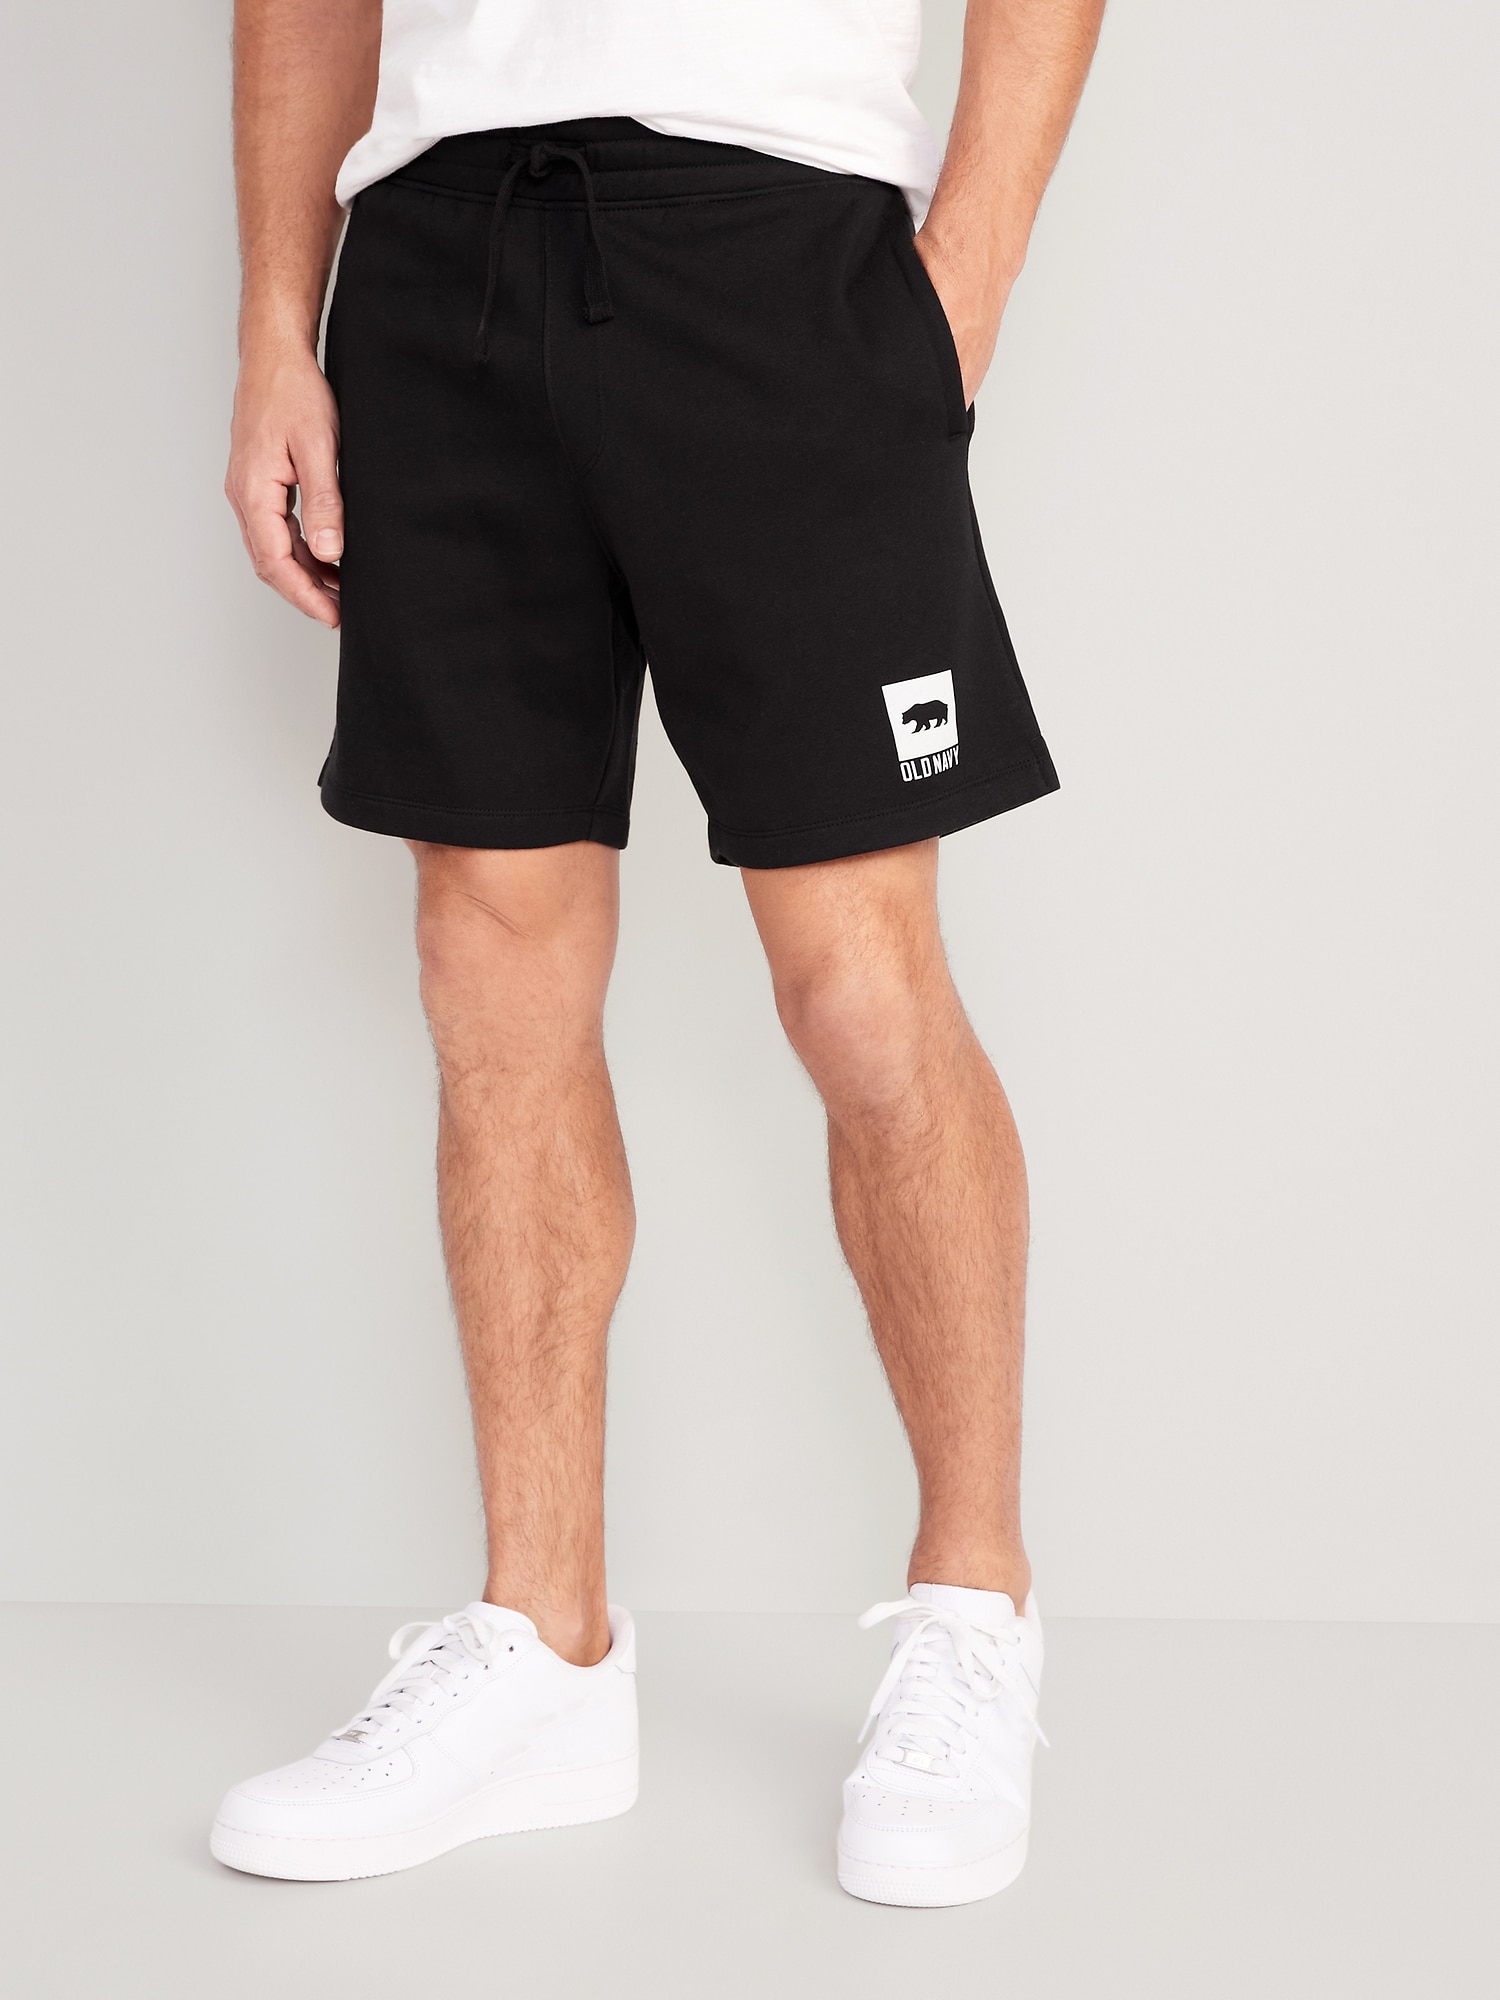 Old Navy Fleece Logo Shorts for Men -- 7-inch inseam black. 1